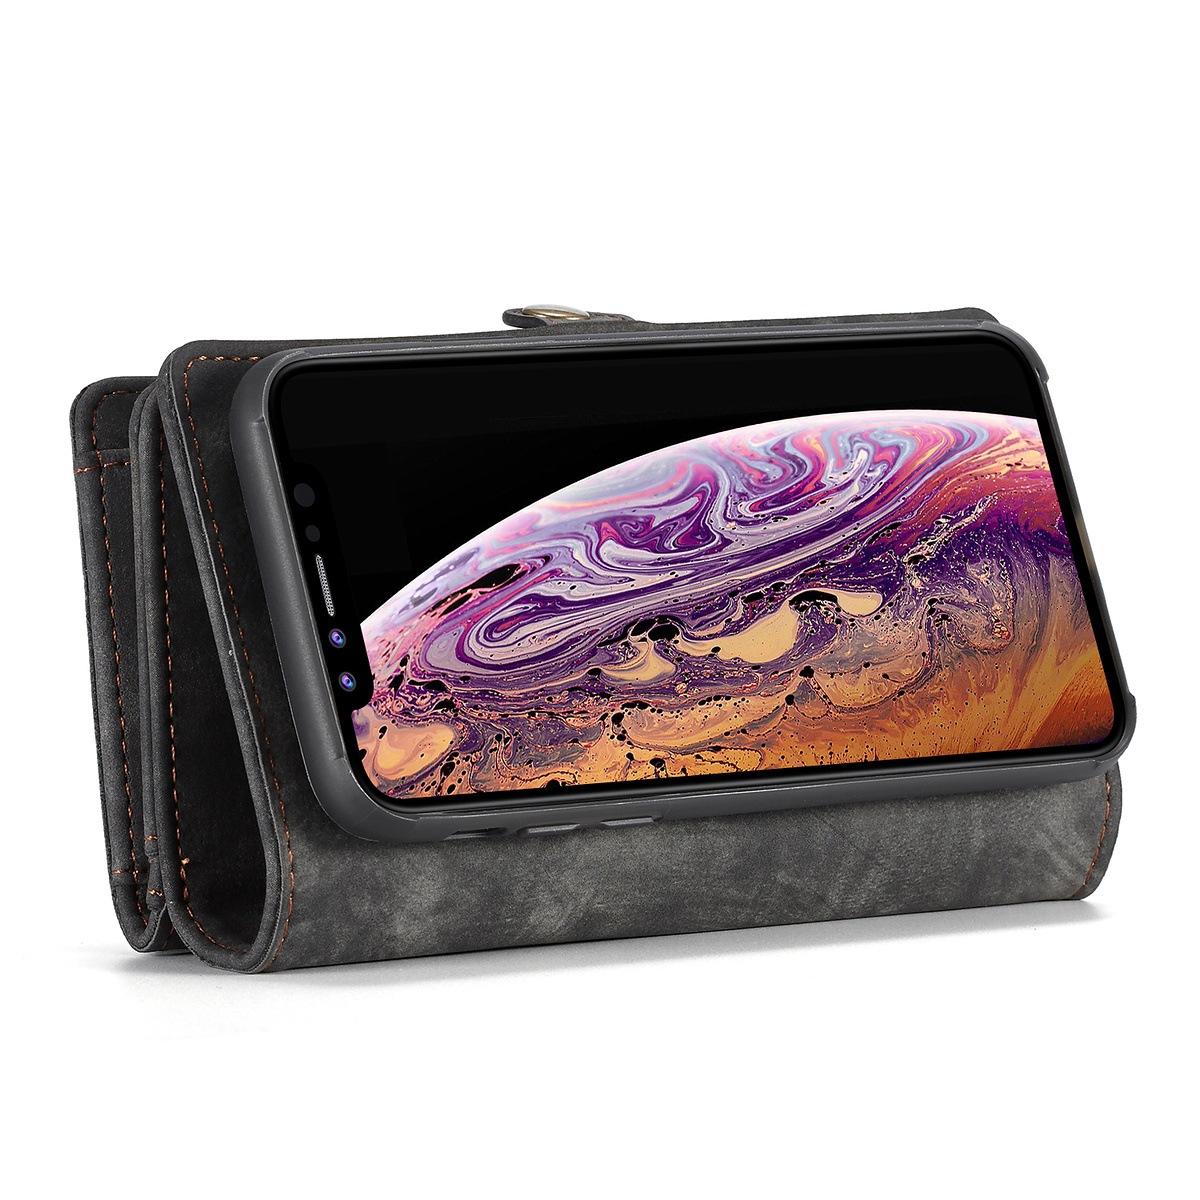 CaseMe plånboksfodral med magnetskal till iPhone XS Max, svart